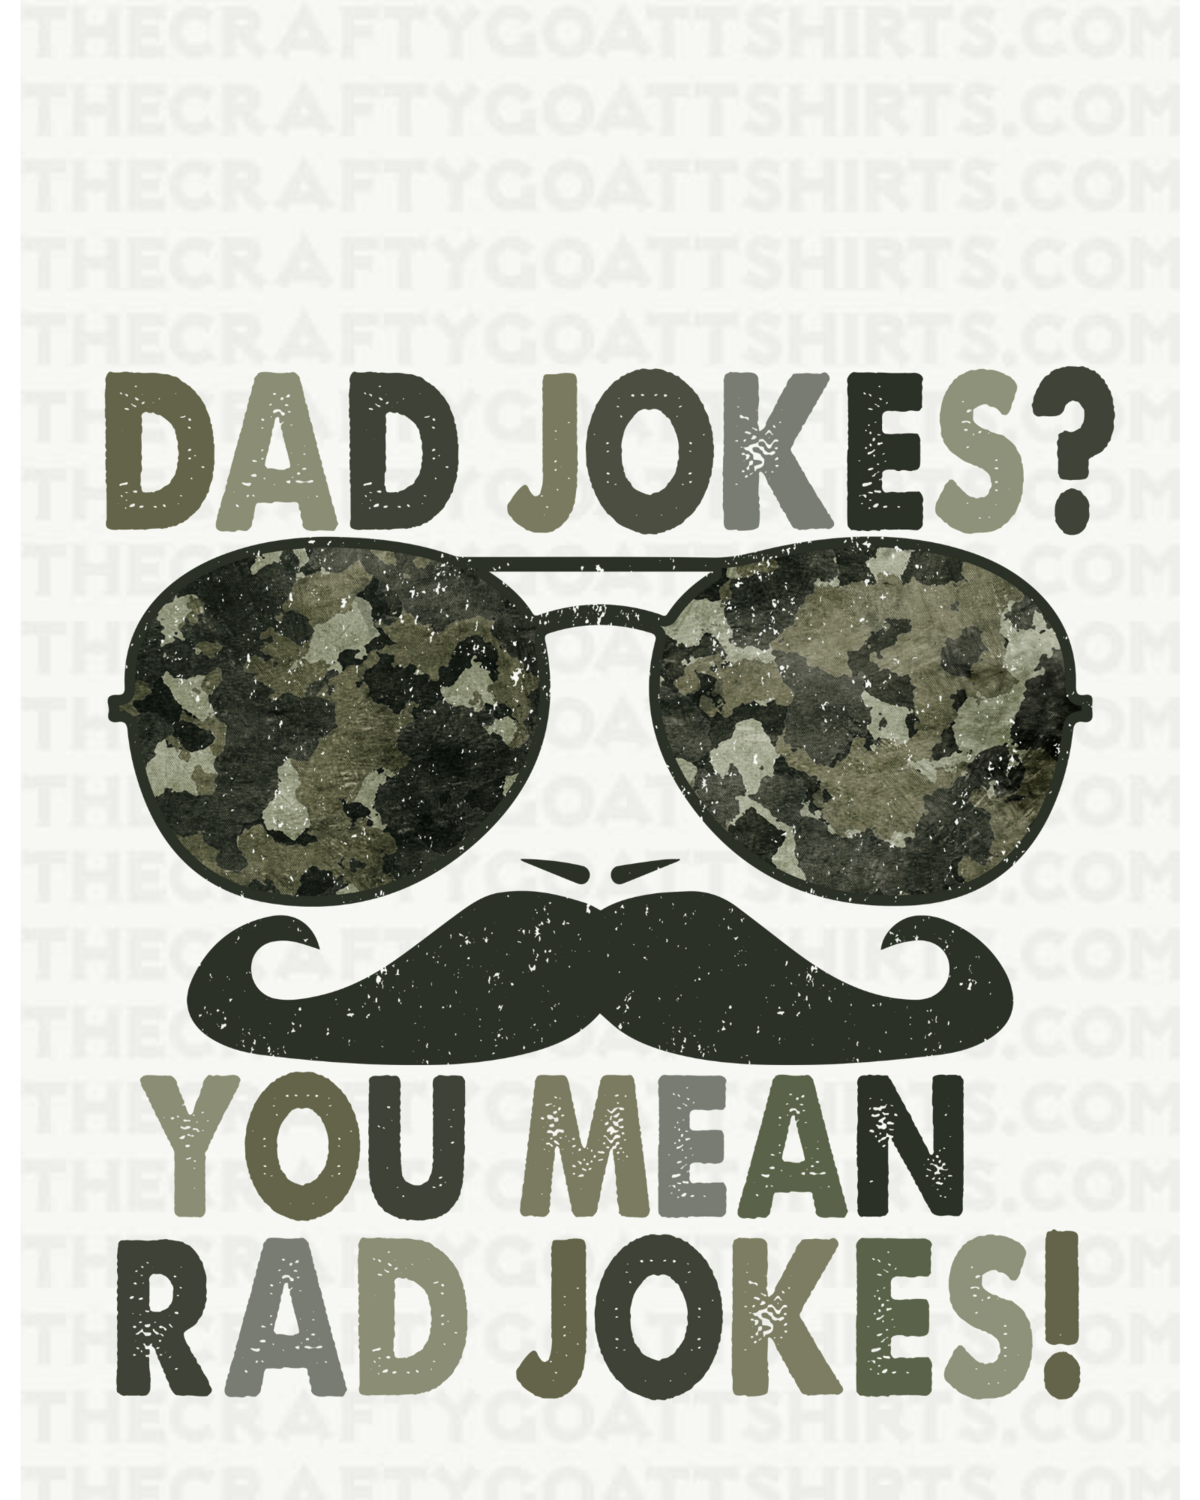 Dad Joke? You mean Rad Jokes